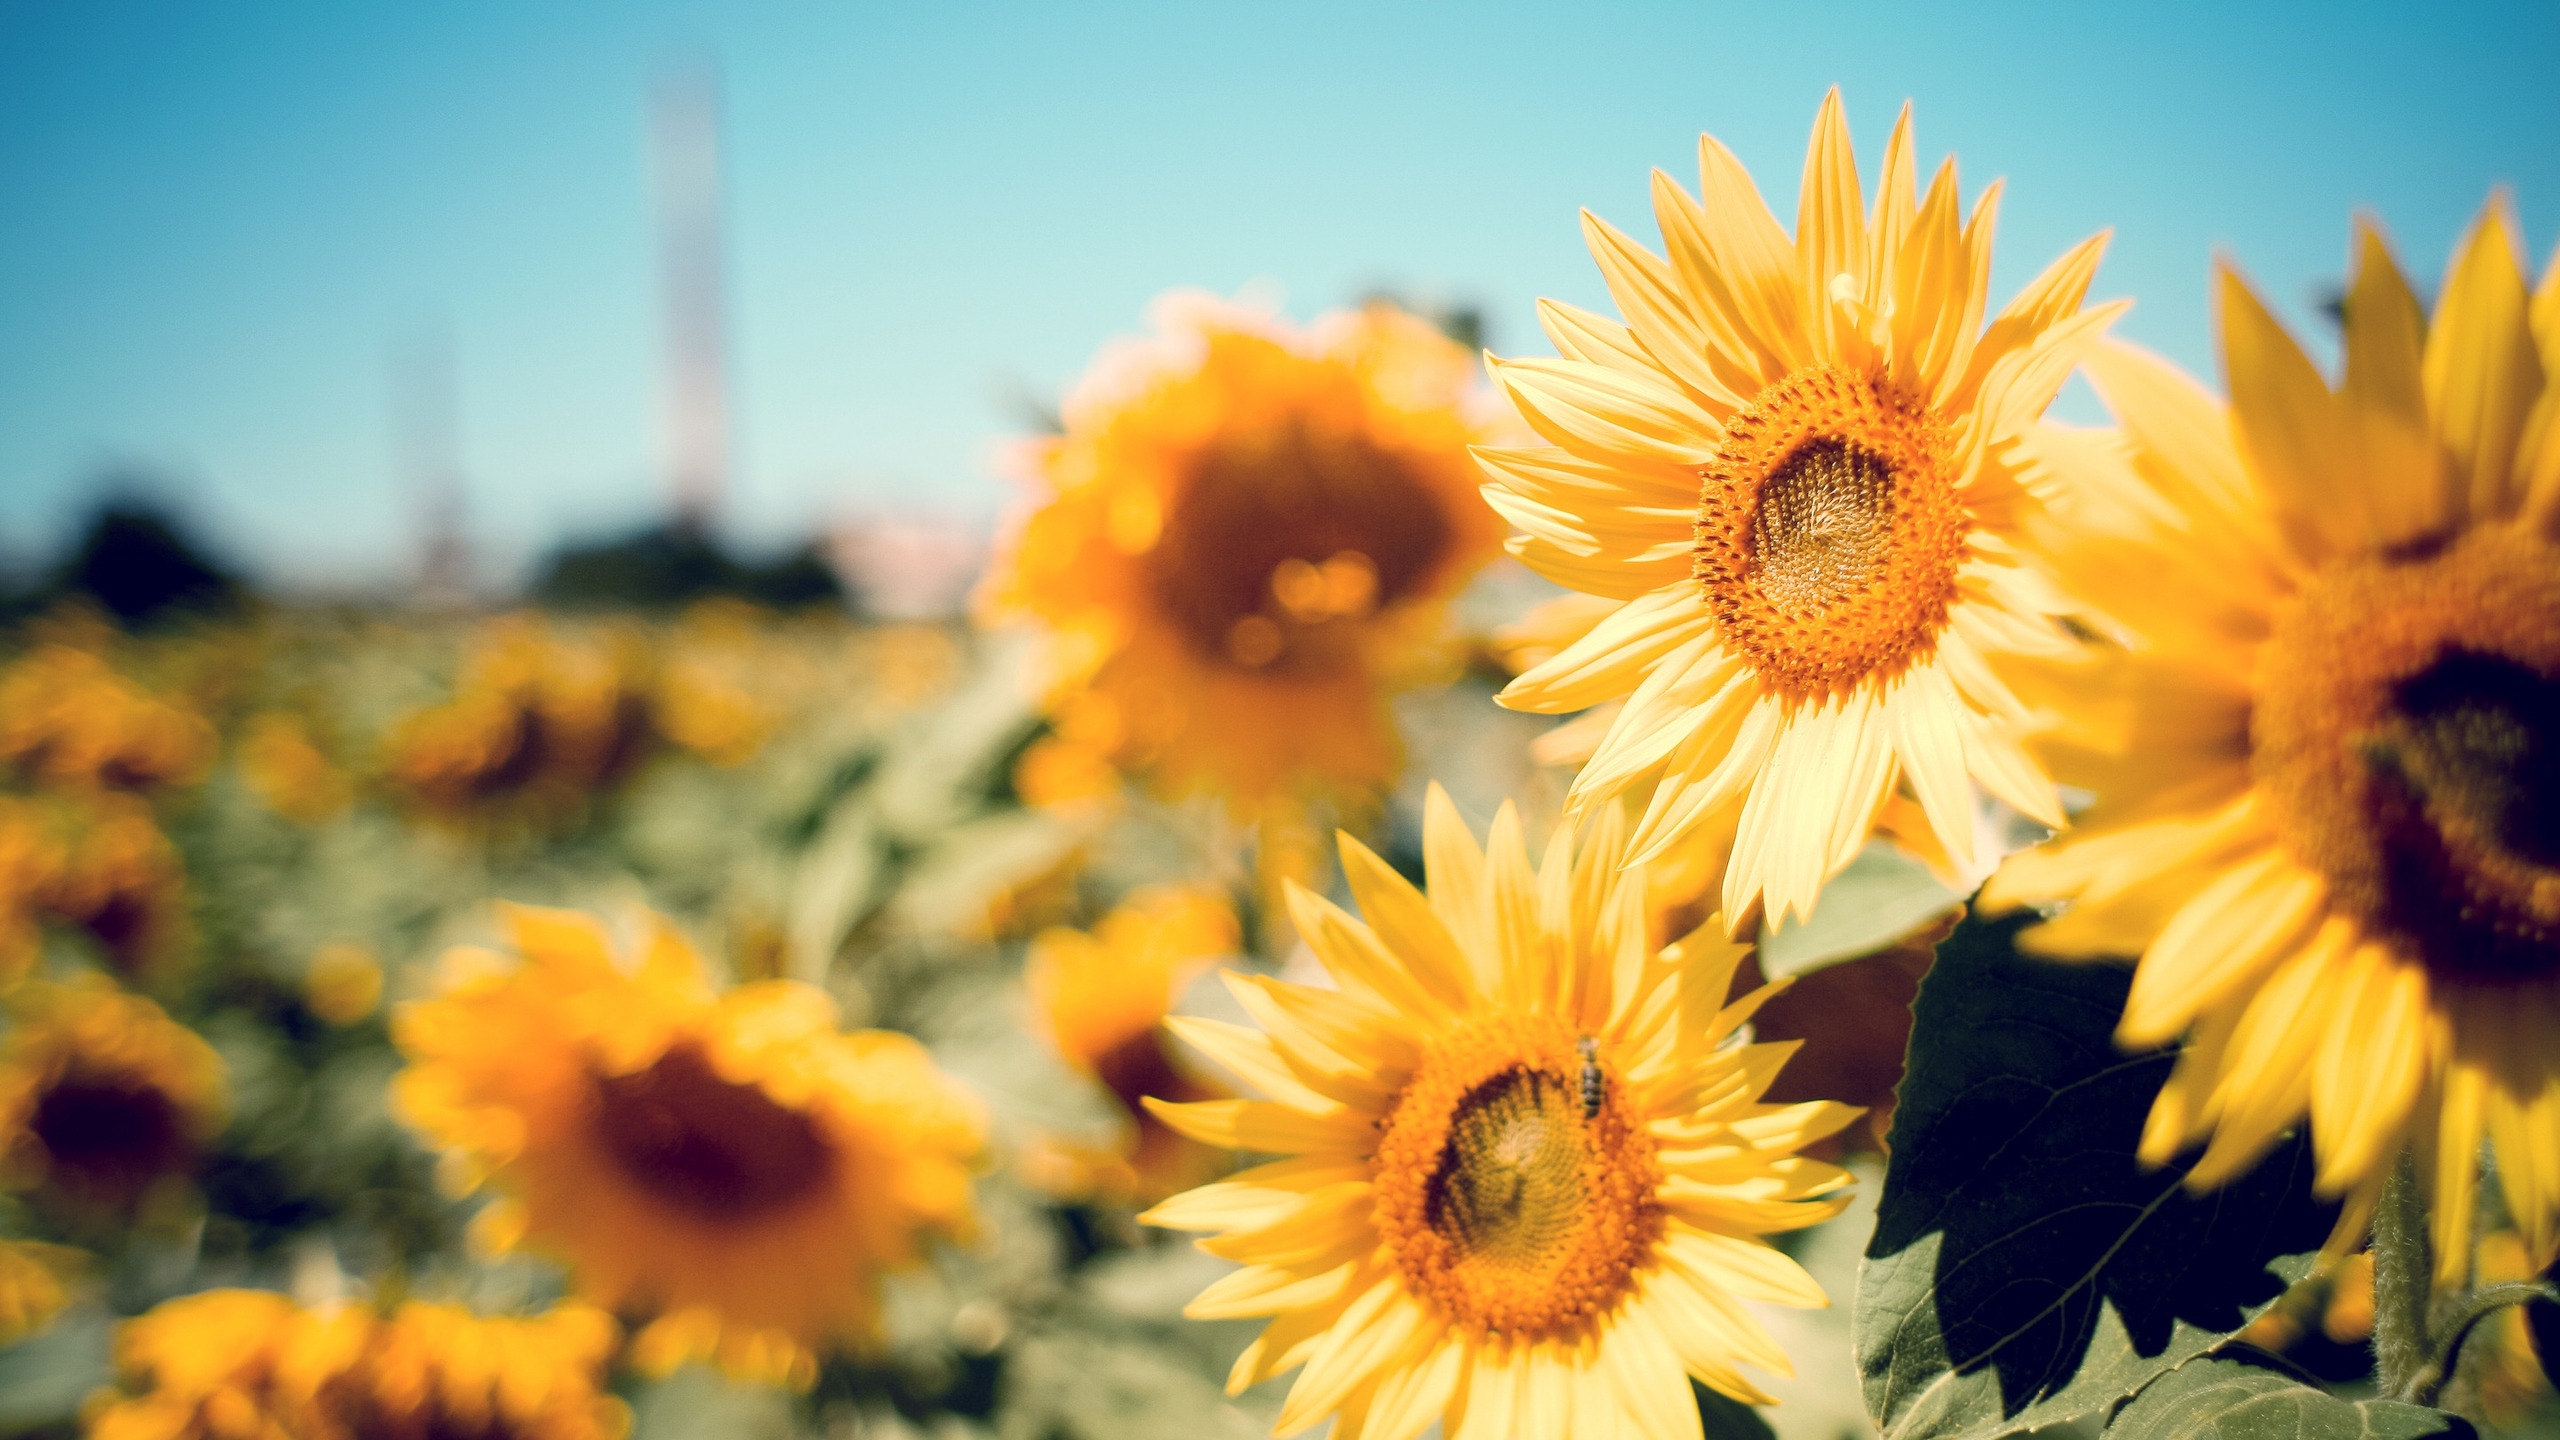 Beautiful Sunflowers for 2560x1440 HDTV resolution